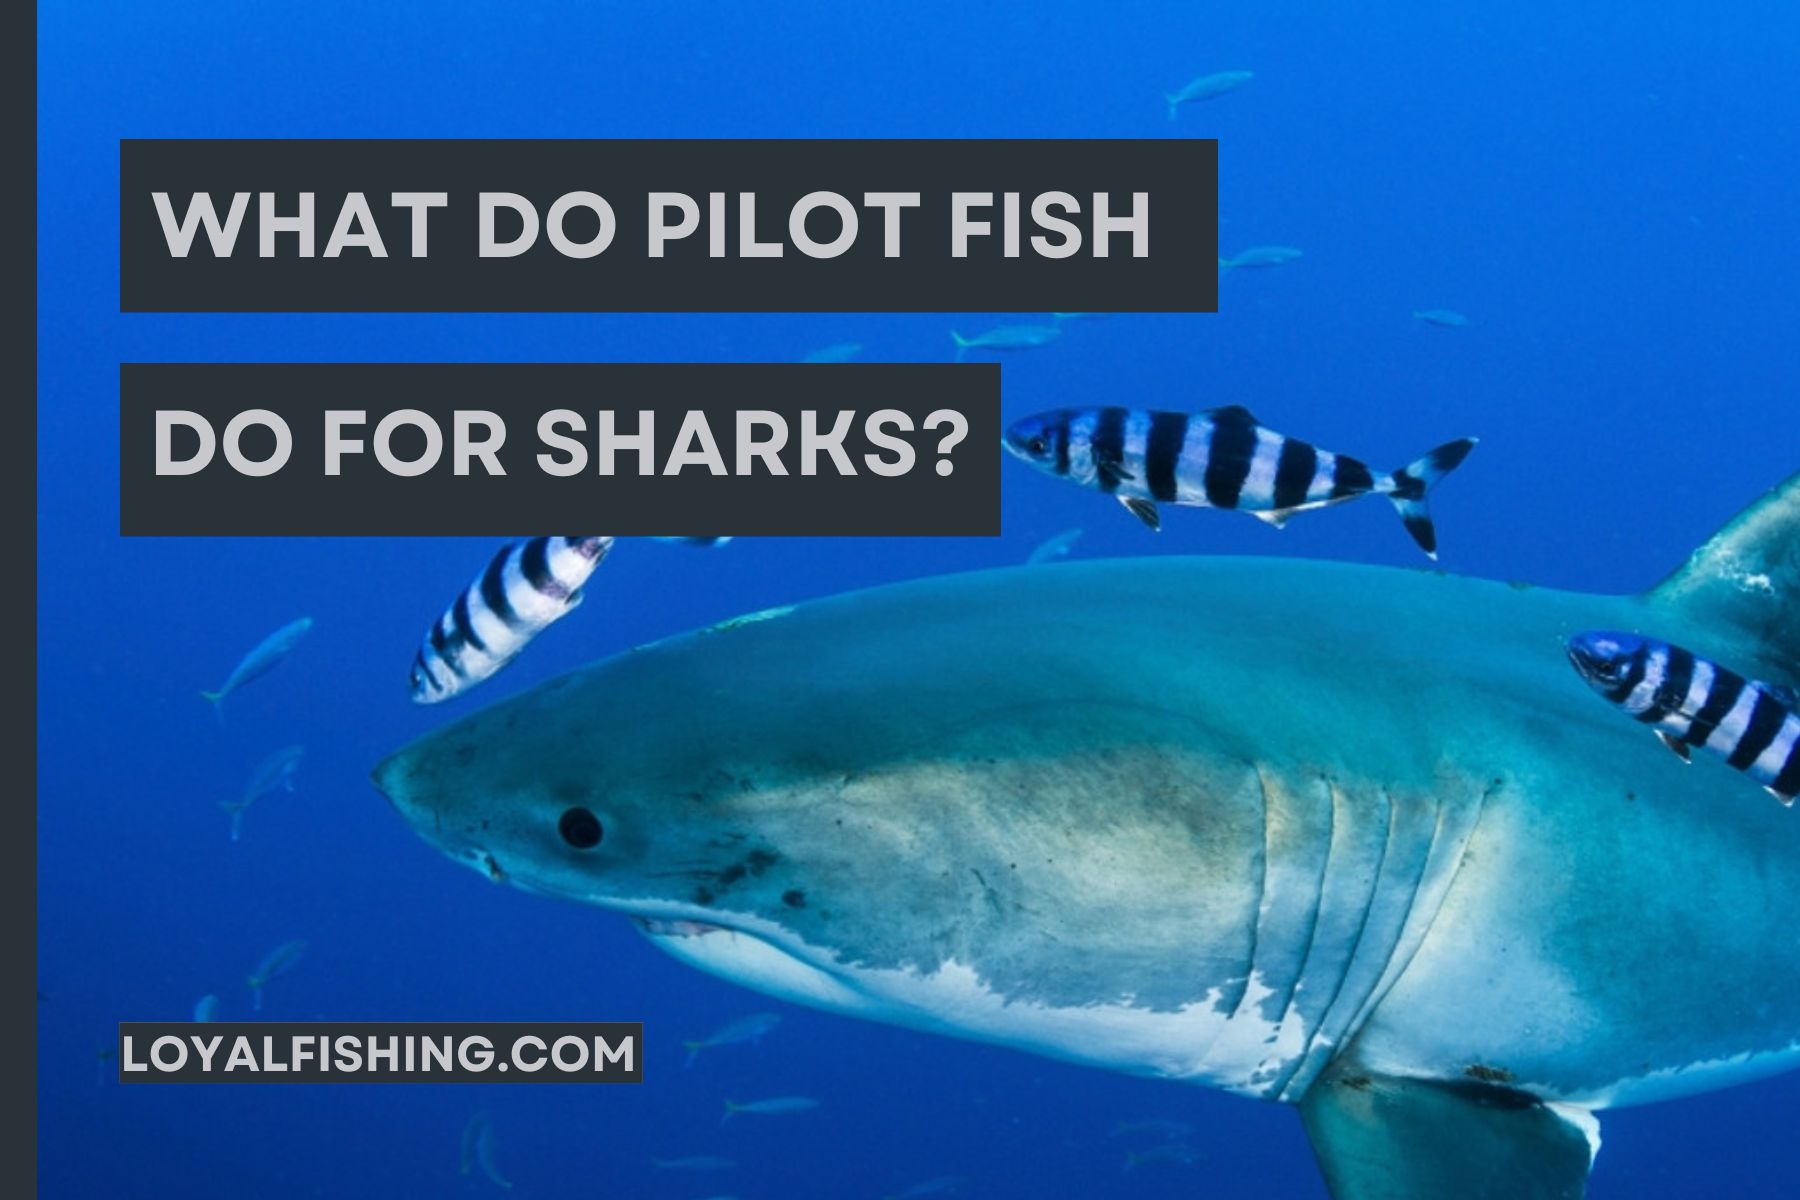 What Do Pilot Fish Do for Sharks